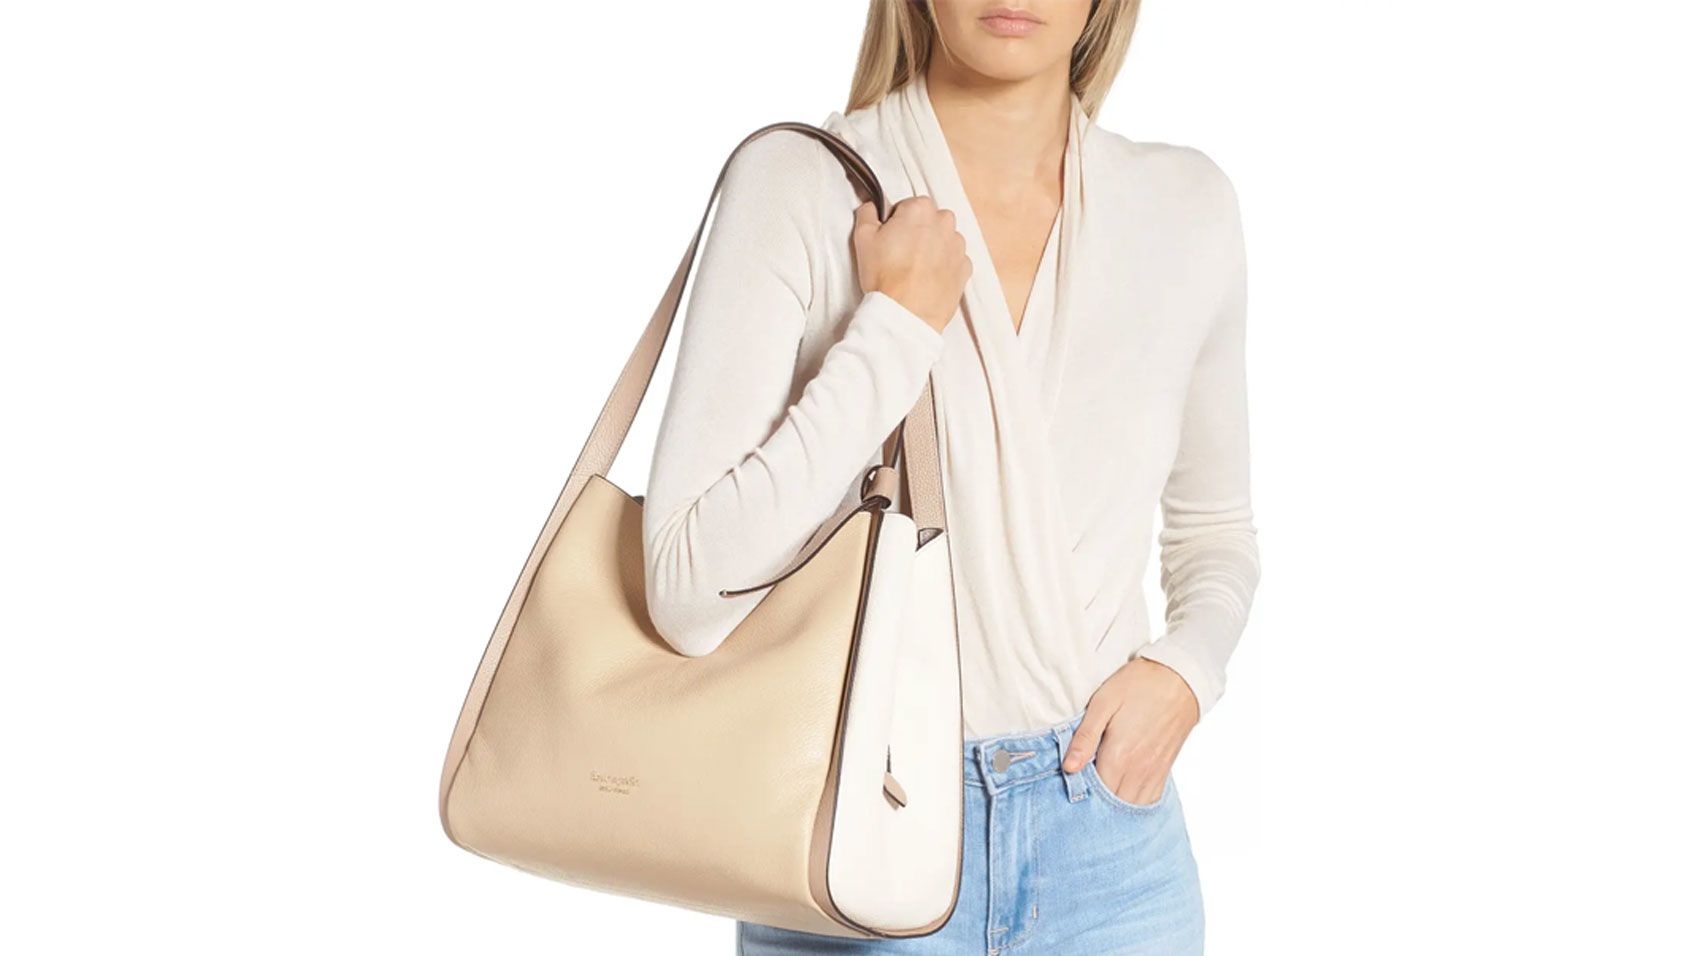 Kate Spade 24-Hour Flash Deal: Get $280 Crossbody Bag for $62